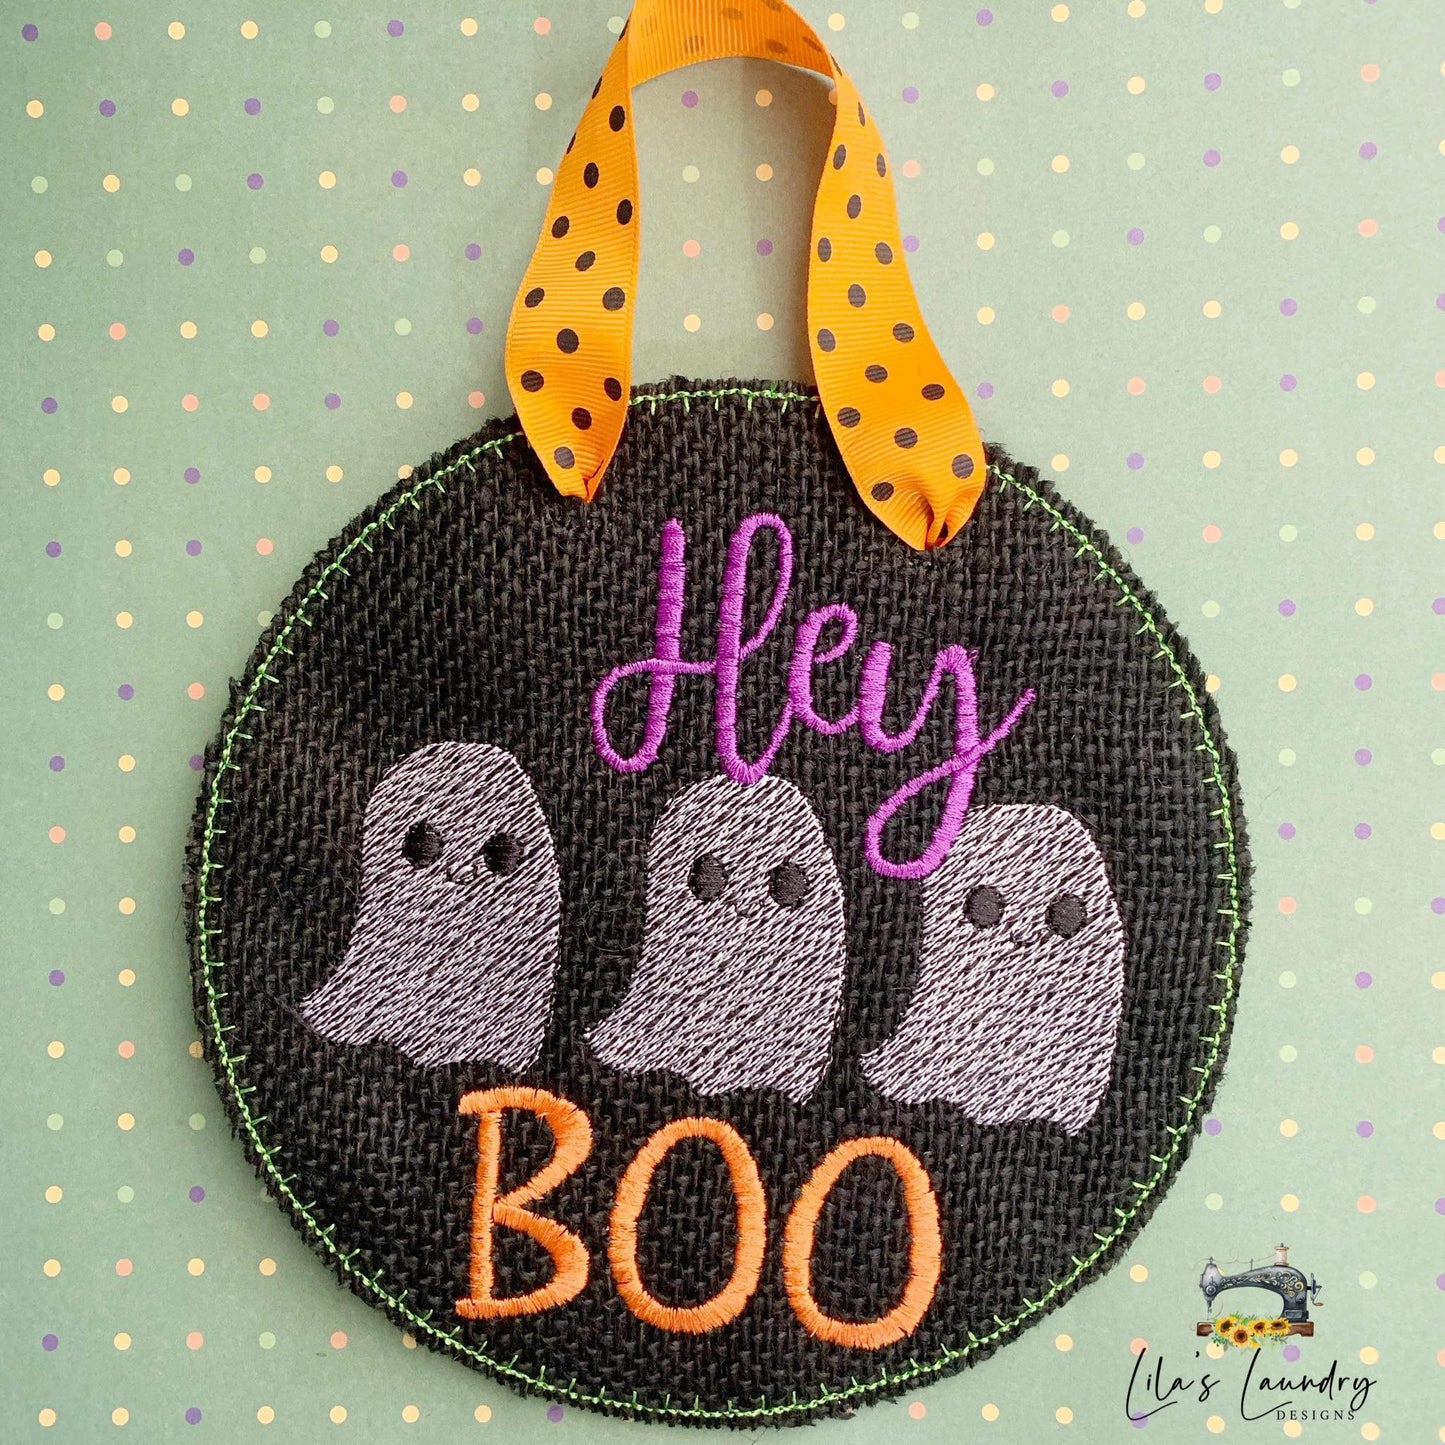 Hey Boo Sketch Door Sign - 3 sizes - Digital Embroidery Design